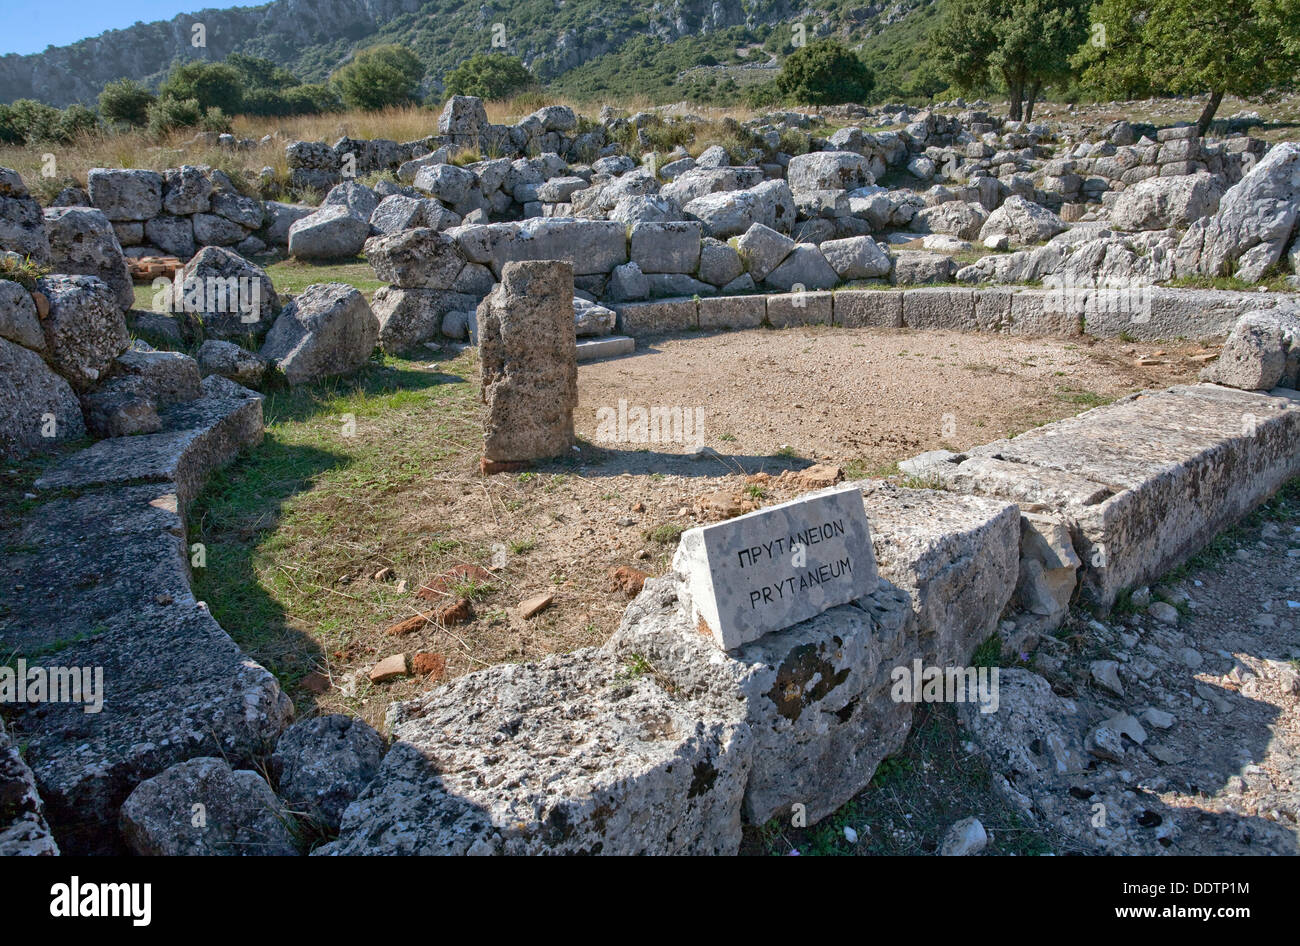 The Prytaneion at Kassope, Greece. Artist: Samuel Magal Stock Photo